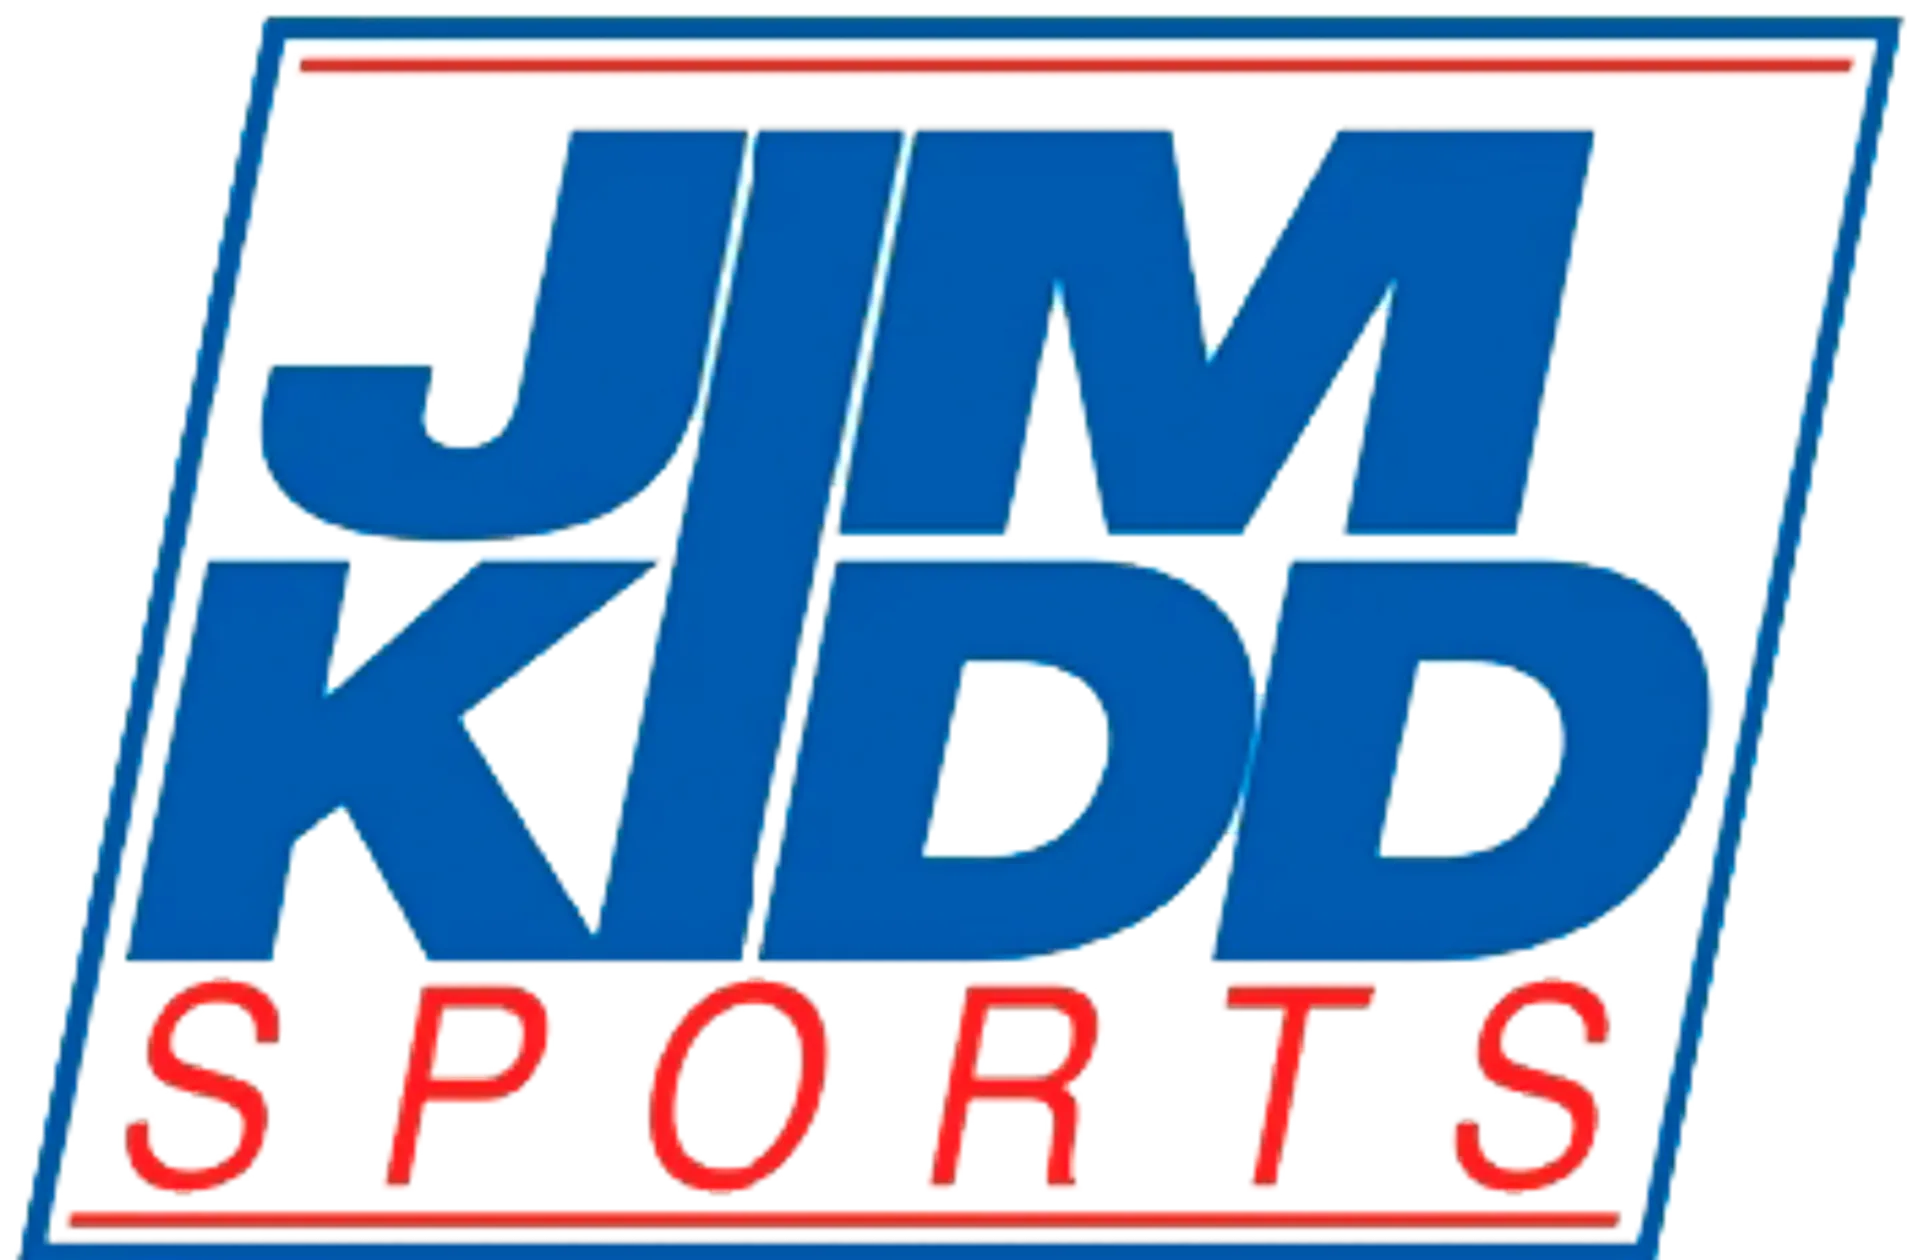 JIM KIDD SPORTS logo of current flyer